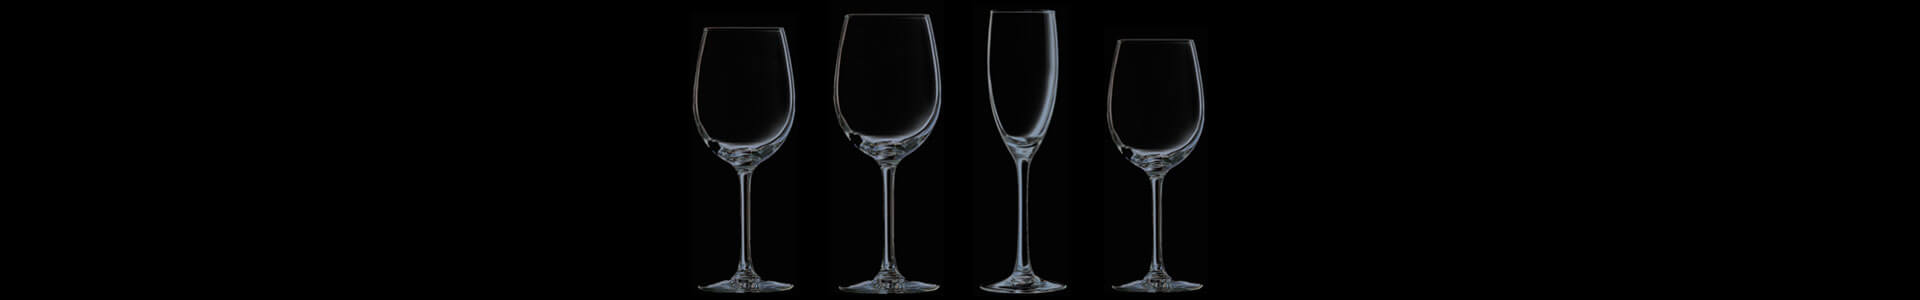 Wine glasses from Arcoroc's Vina series.